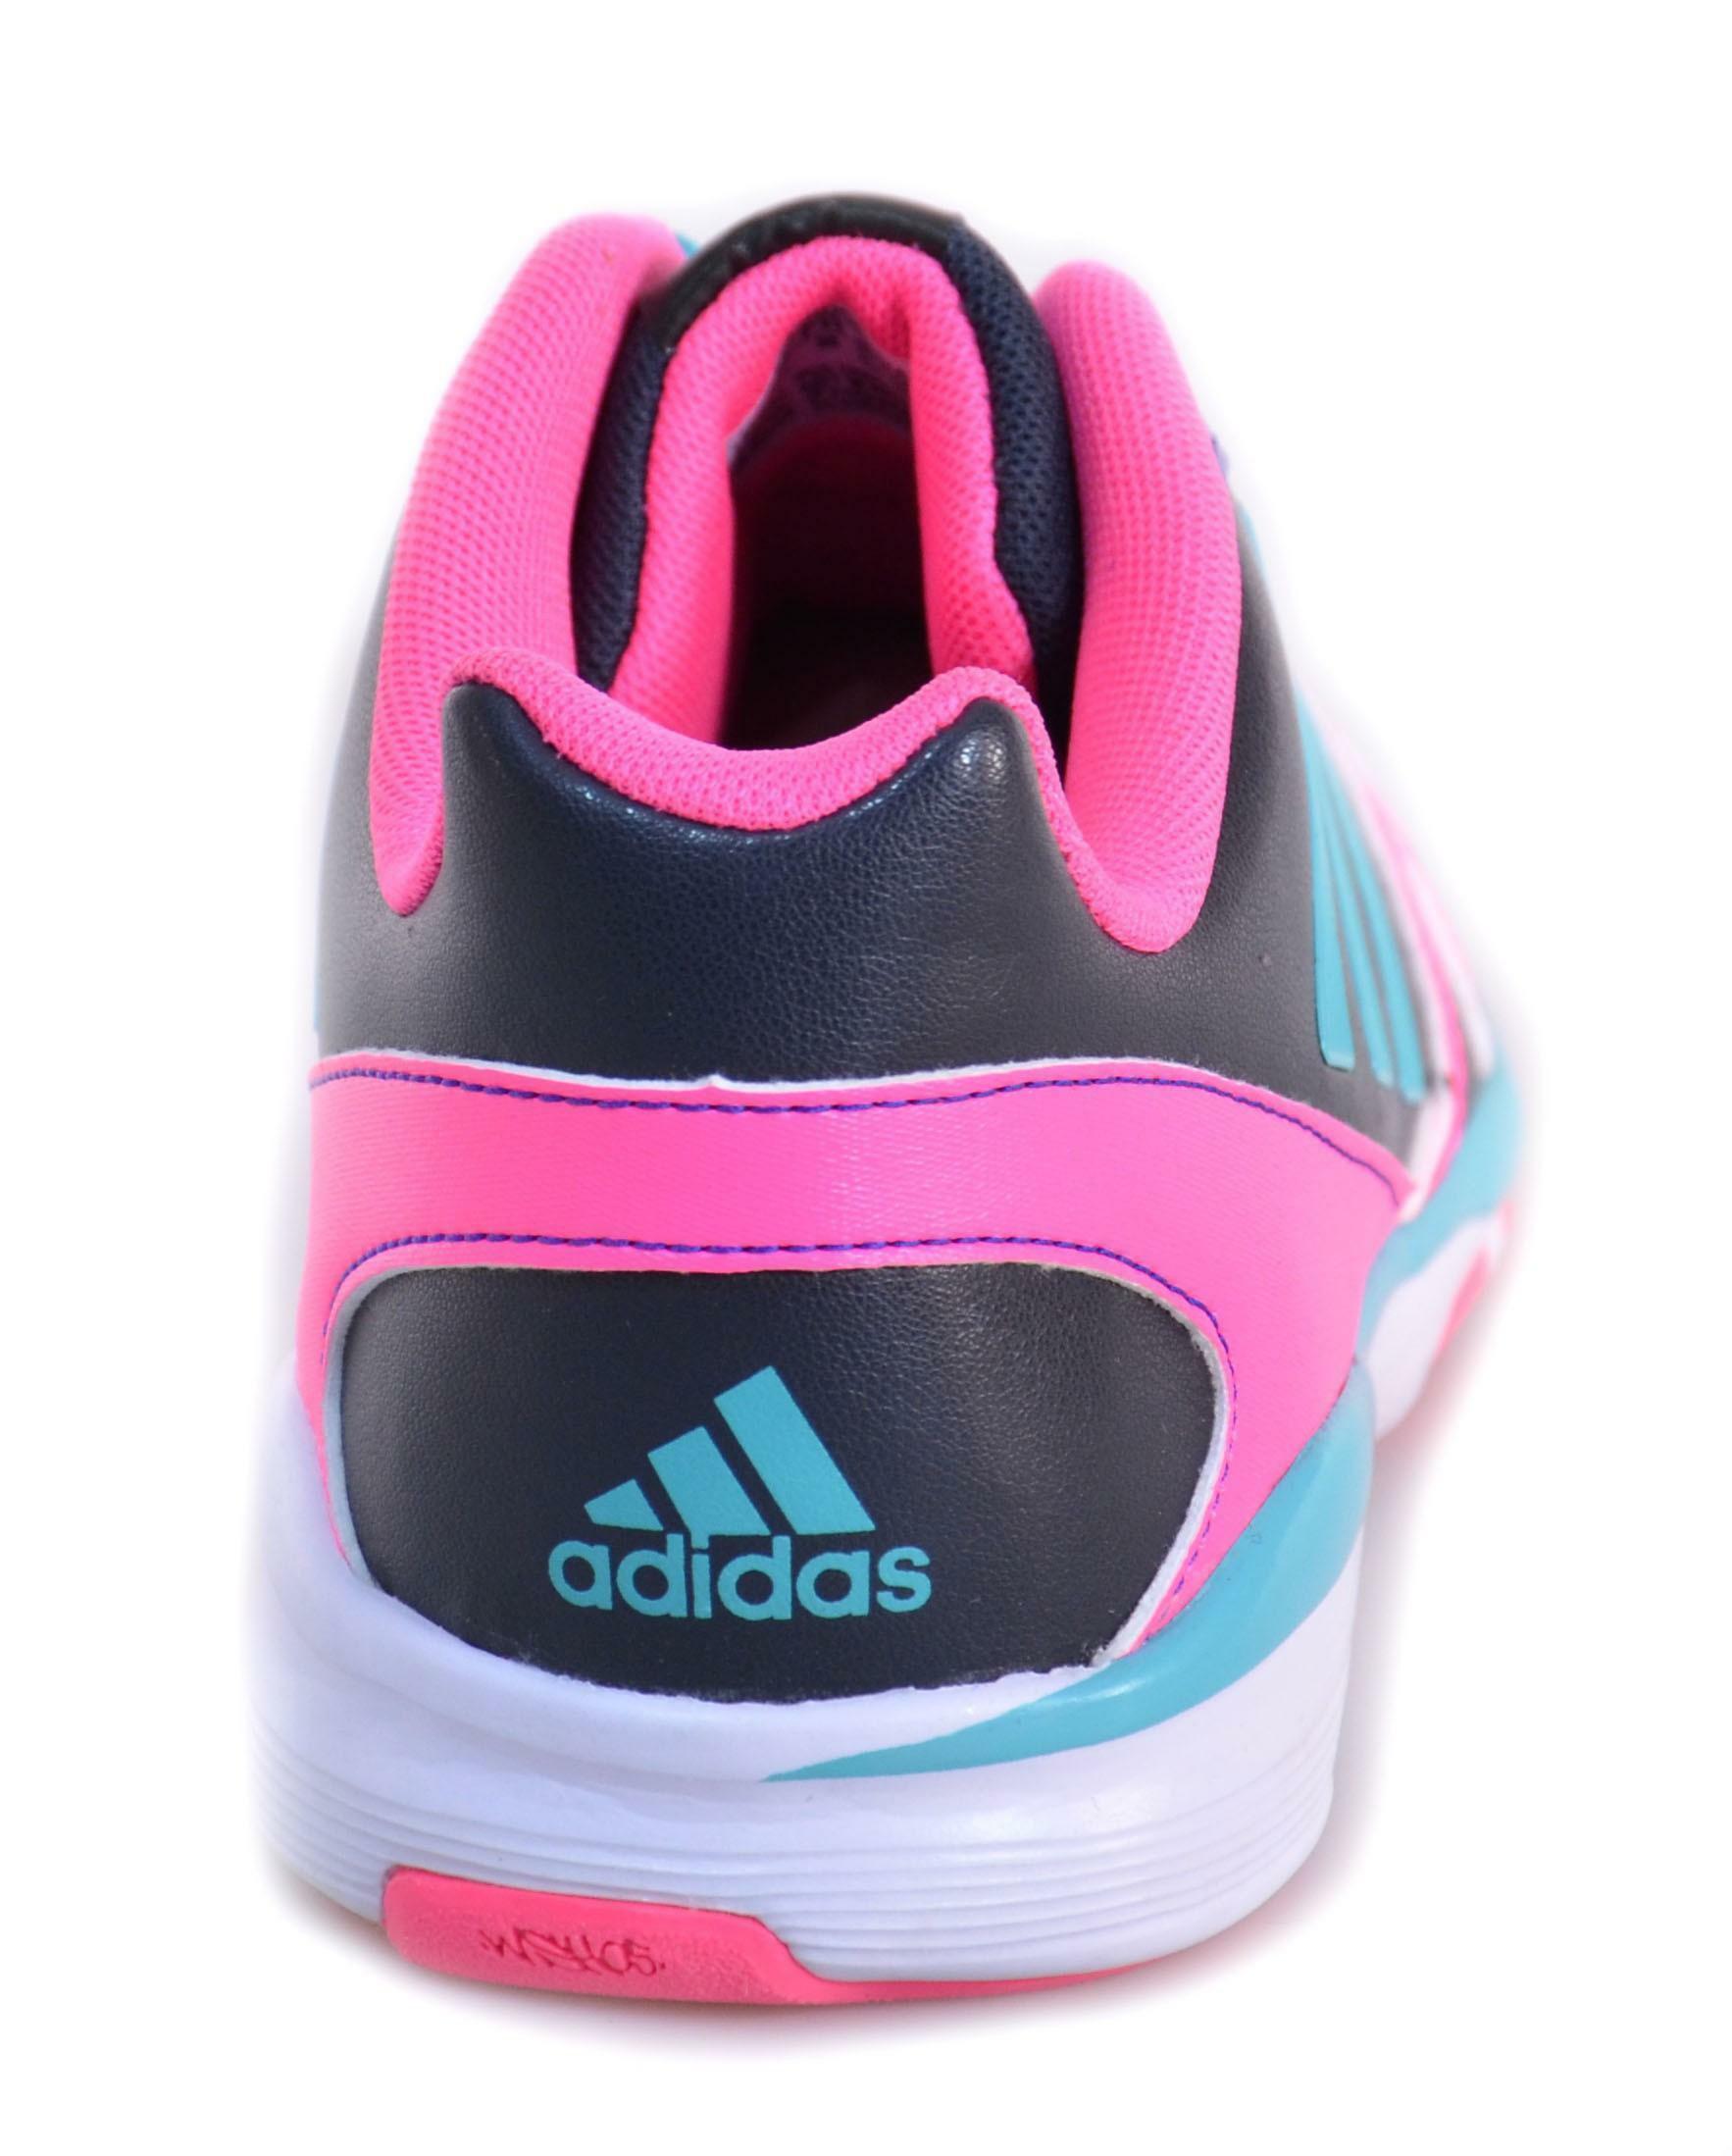 adidas adidas dance low k scarpe nere rosa pelle m20497